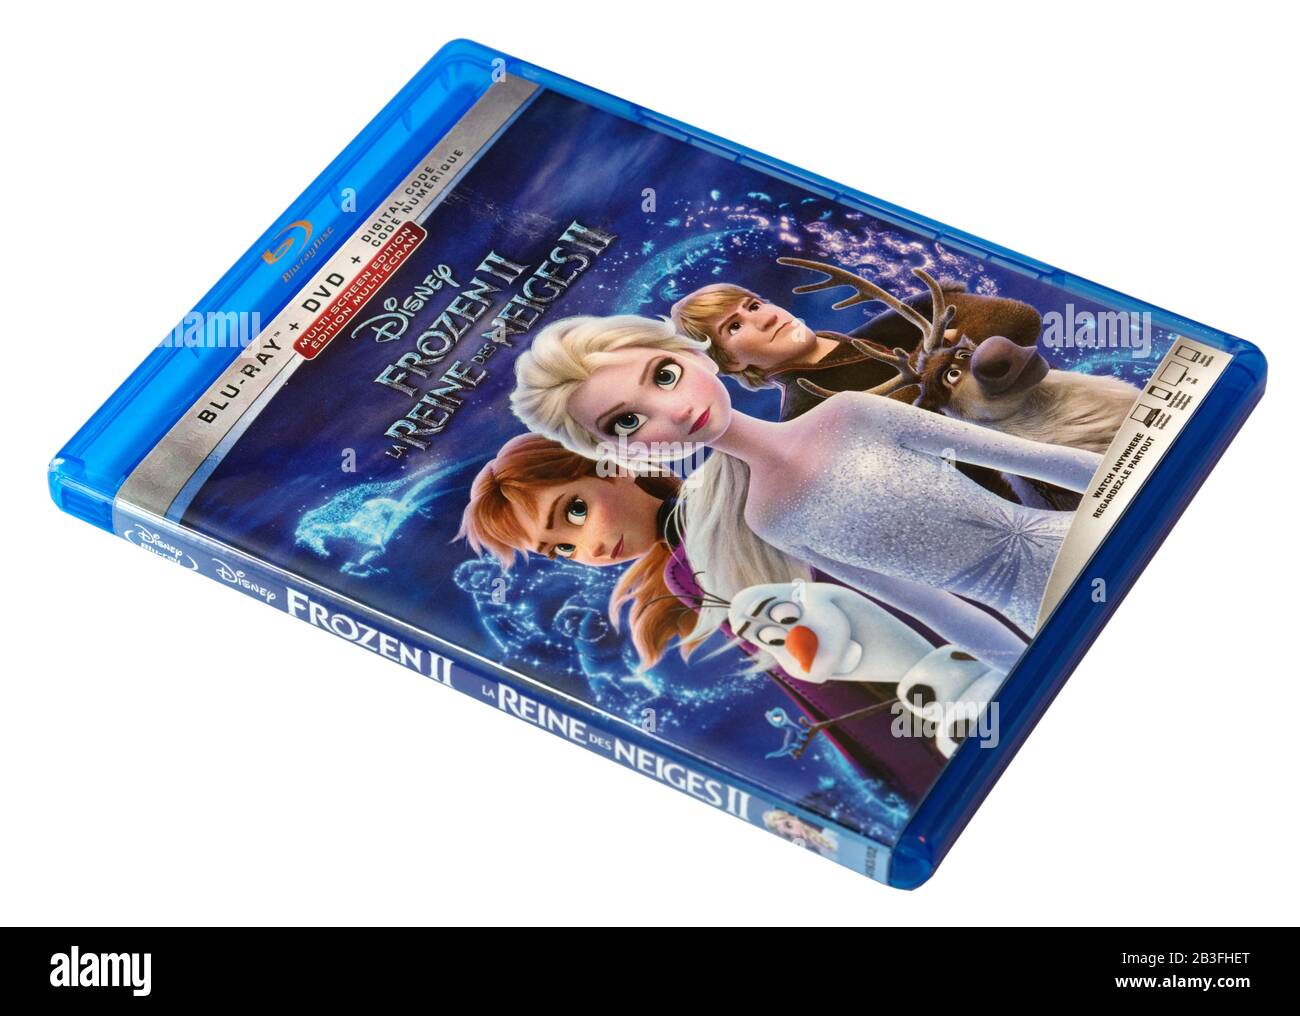 Frozen 2 DVD Stock Photo